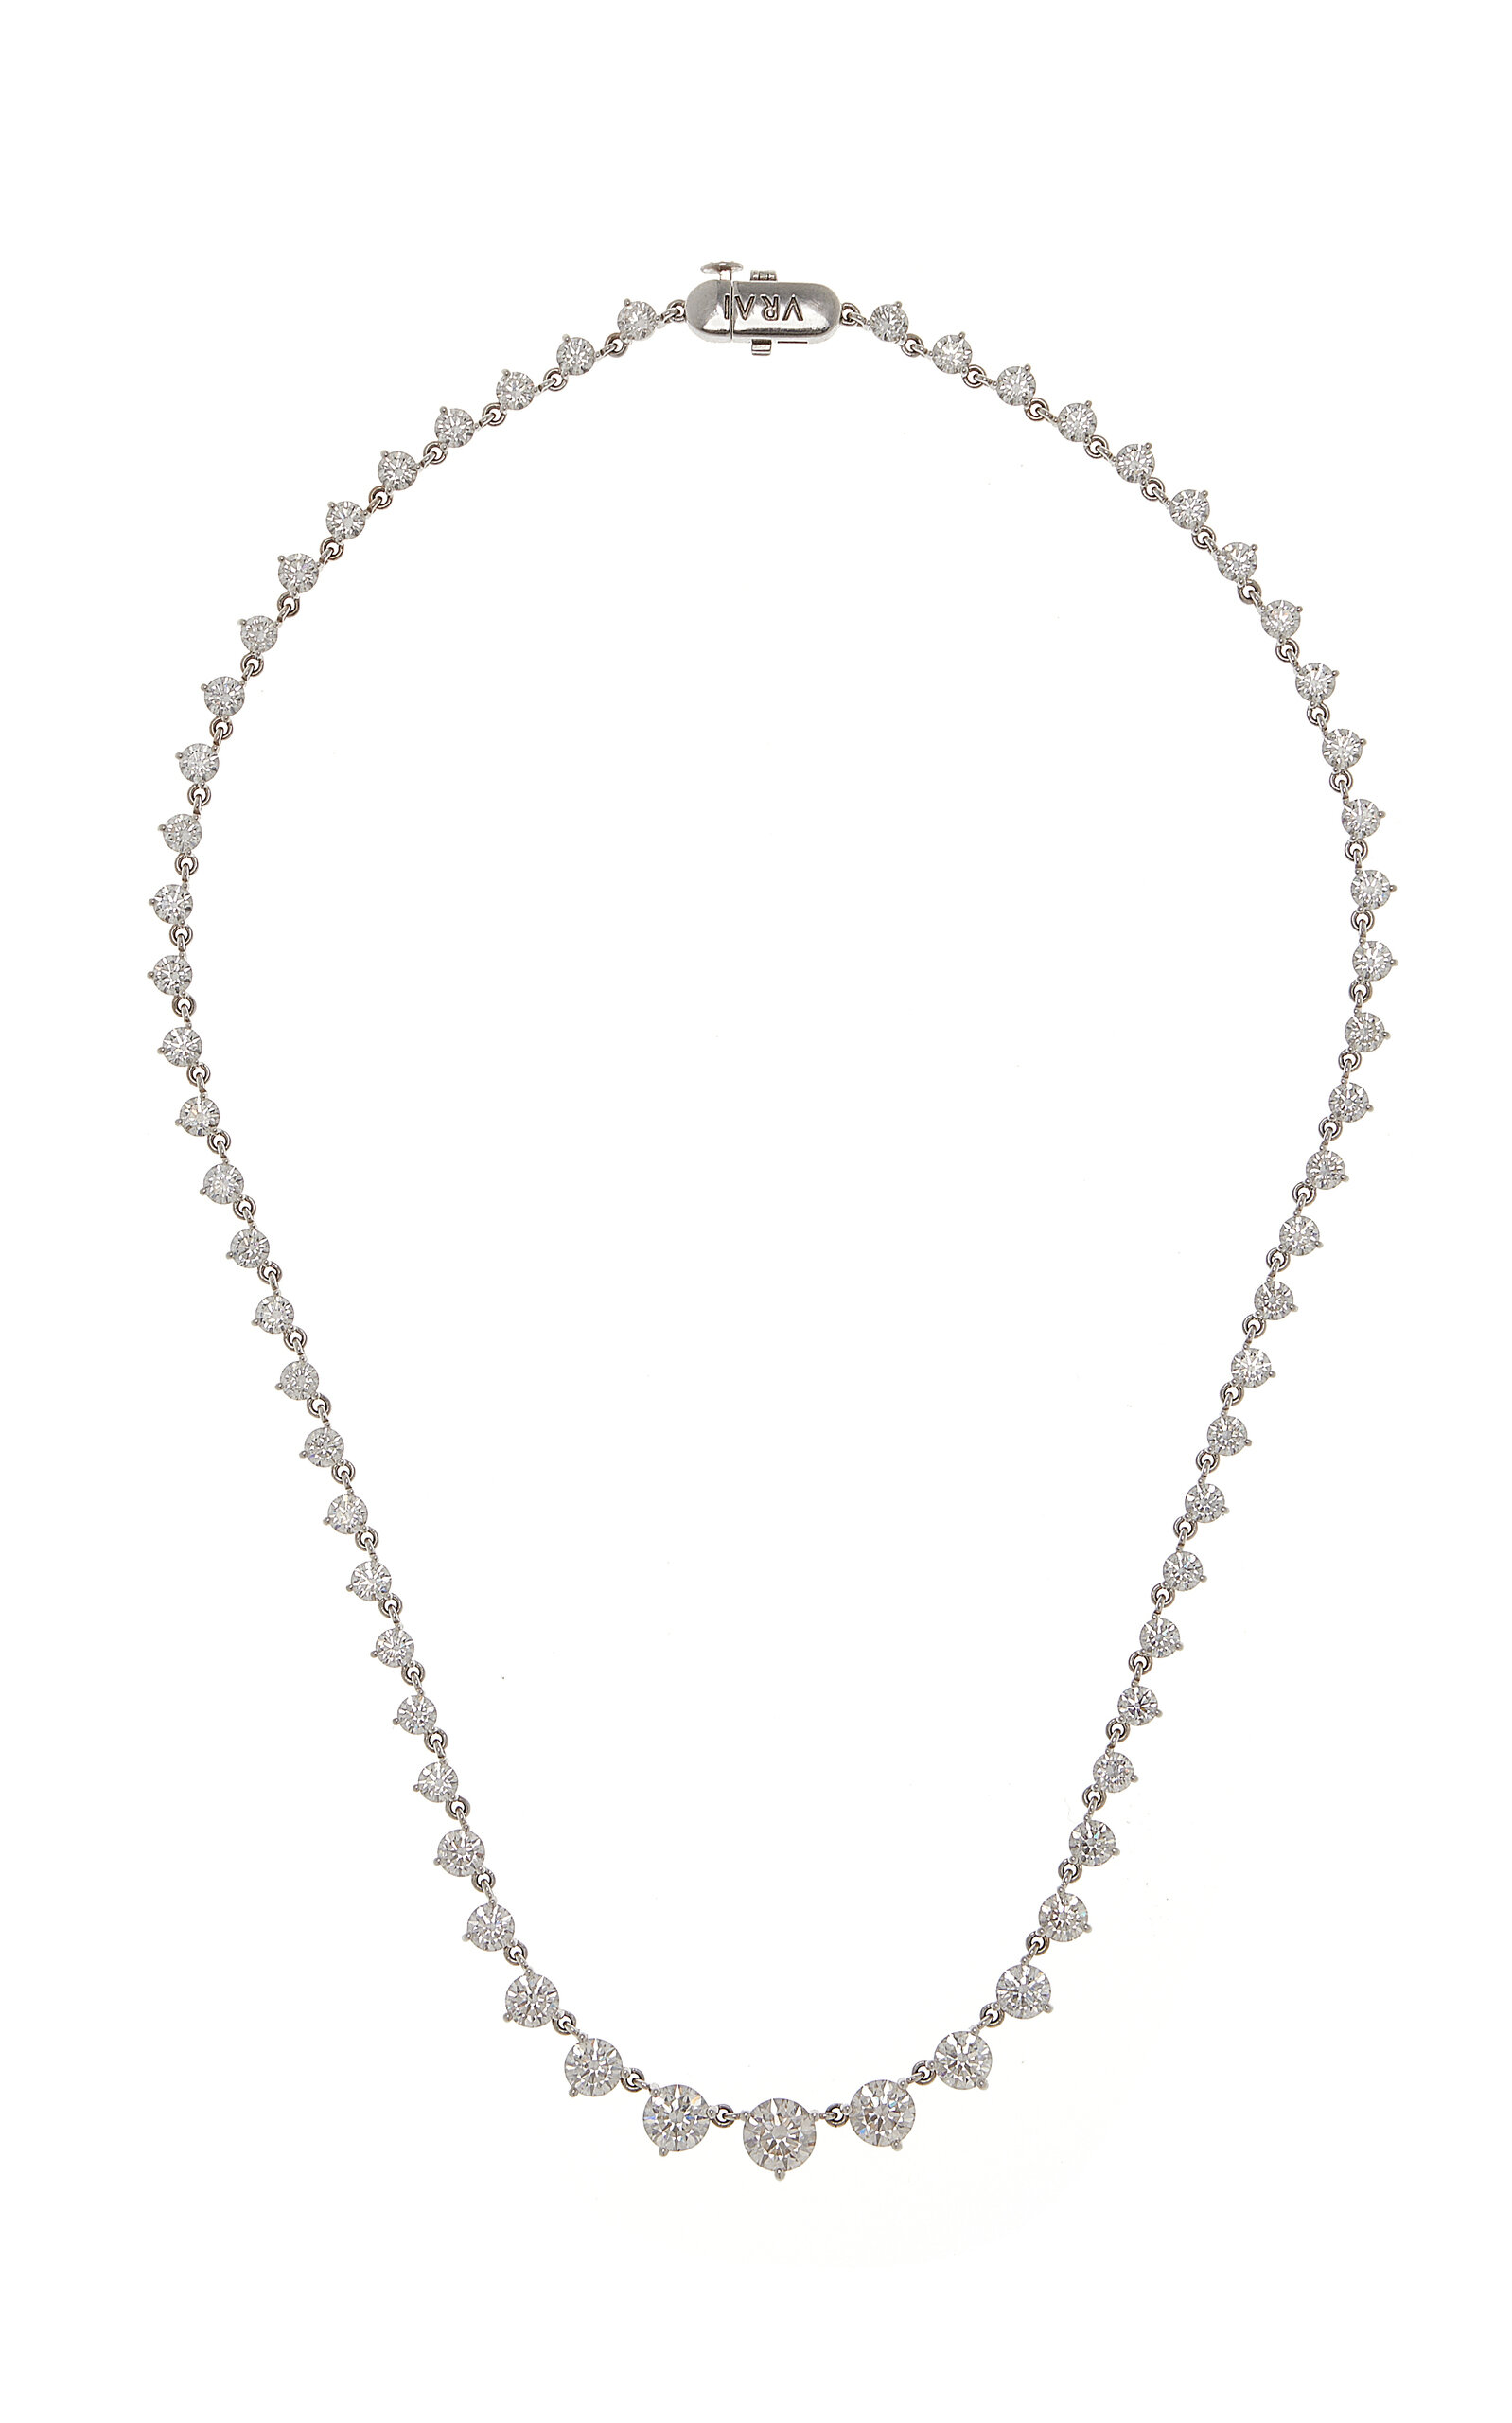 14K White Gold Full Linked VRAI Created Diamond Tennis Necklace